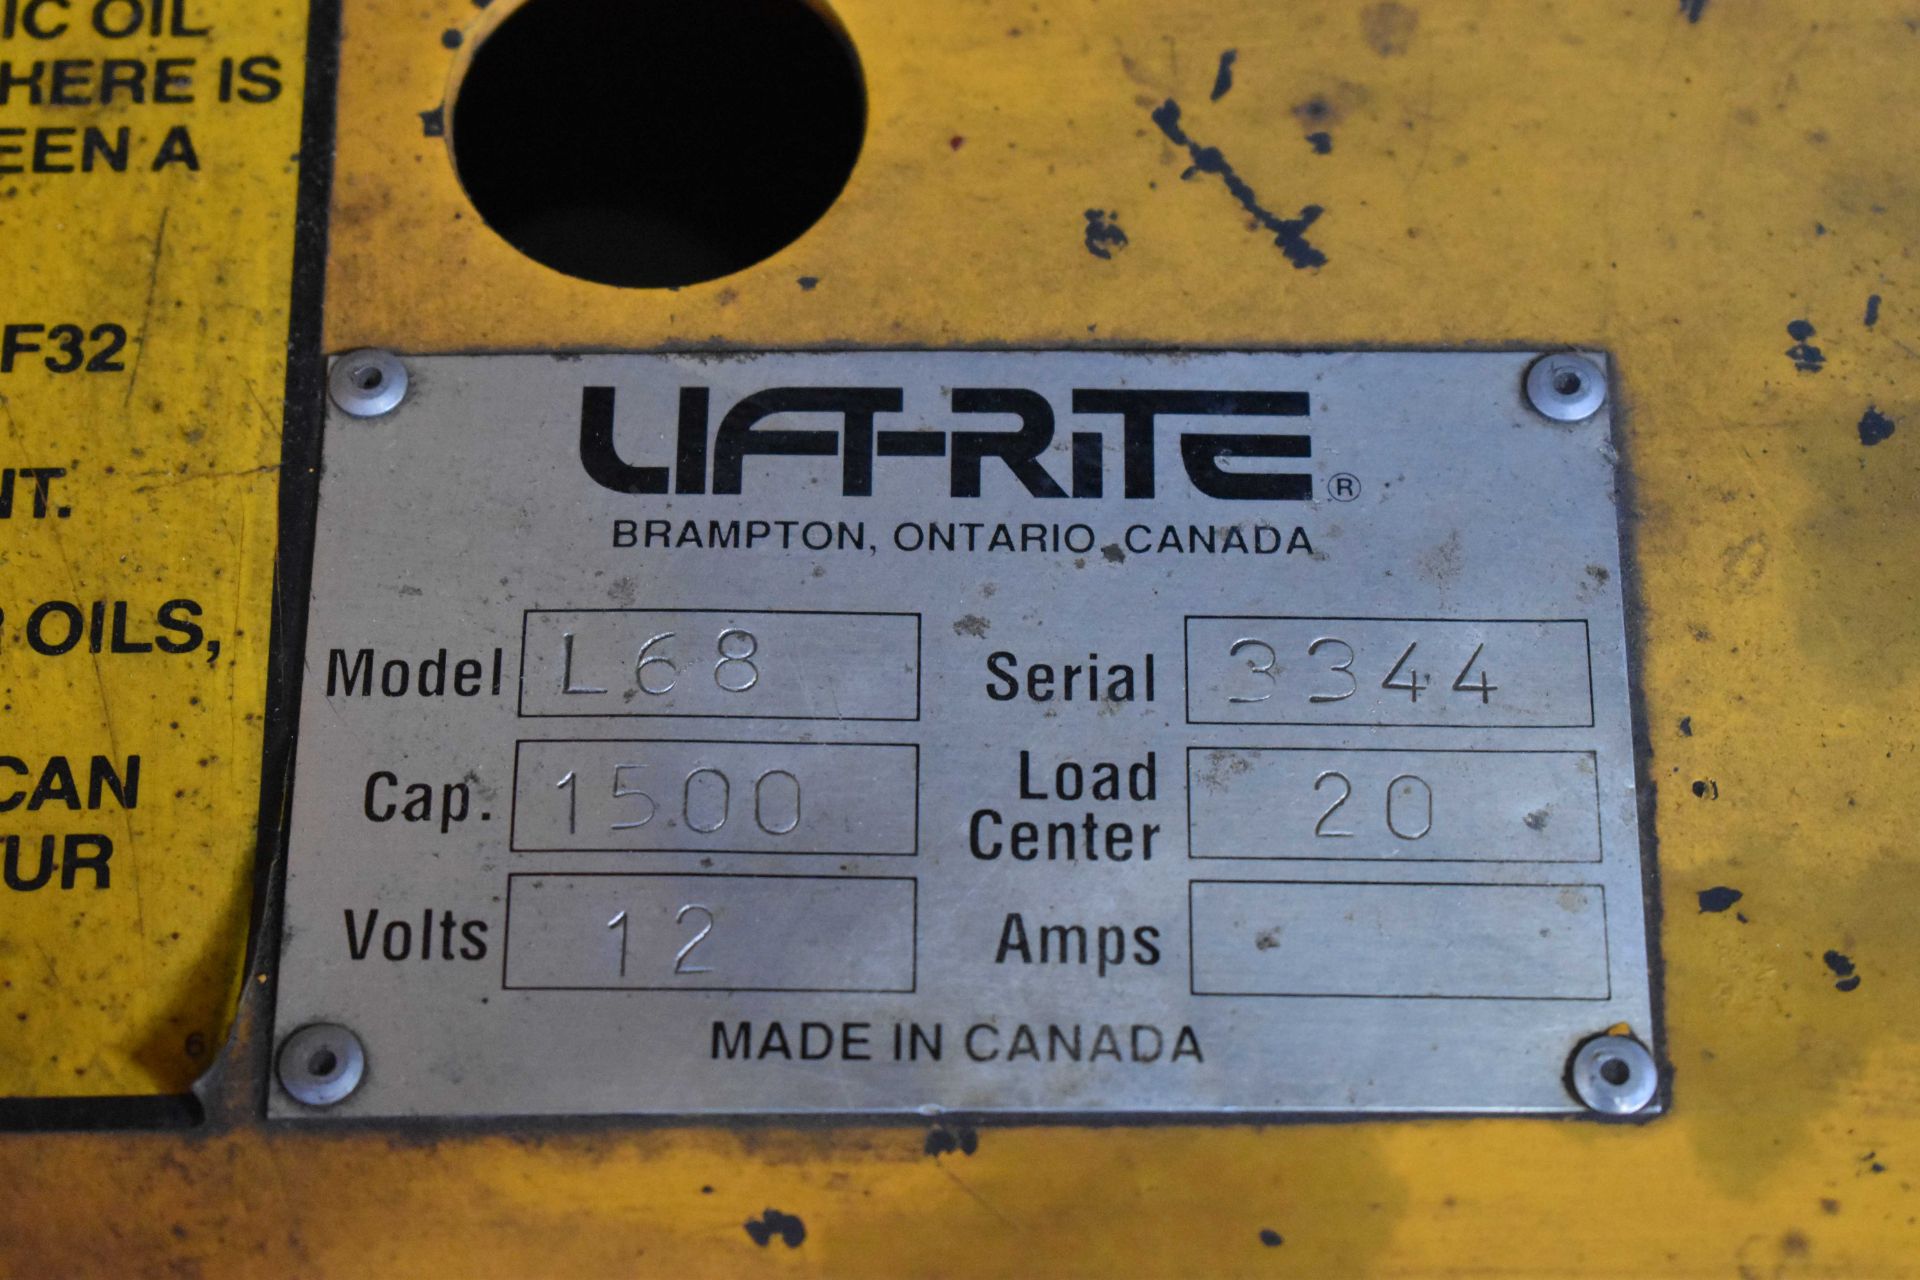 LIFTRITE L68 1500 LB. CAPACITY ELECTRIC DIE LIFT CART, S/N: 3344 - Image 3 of 3